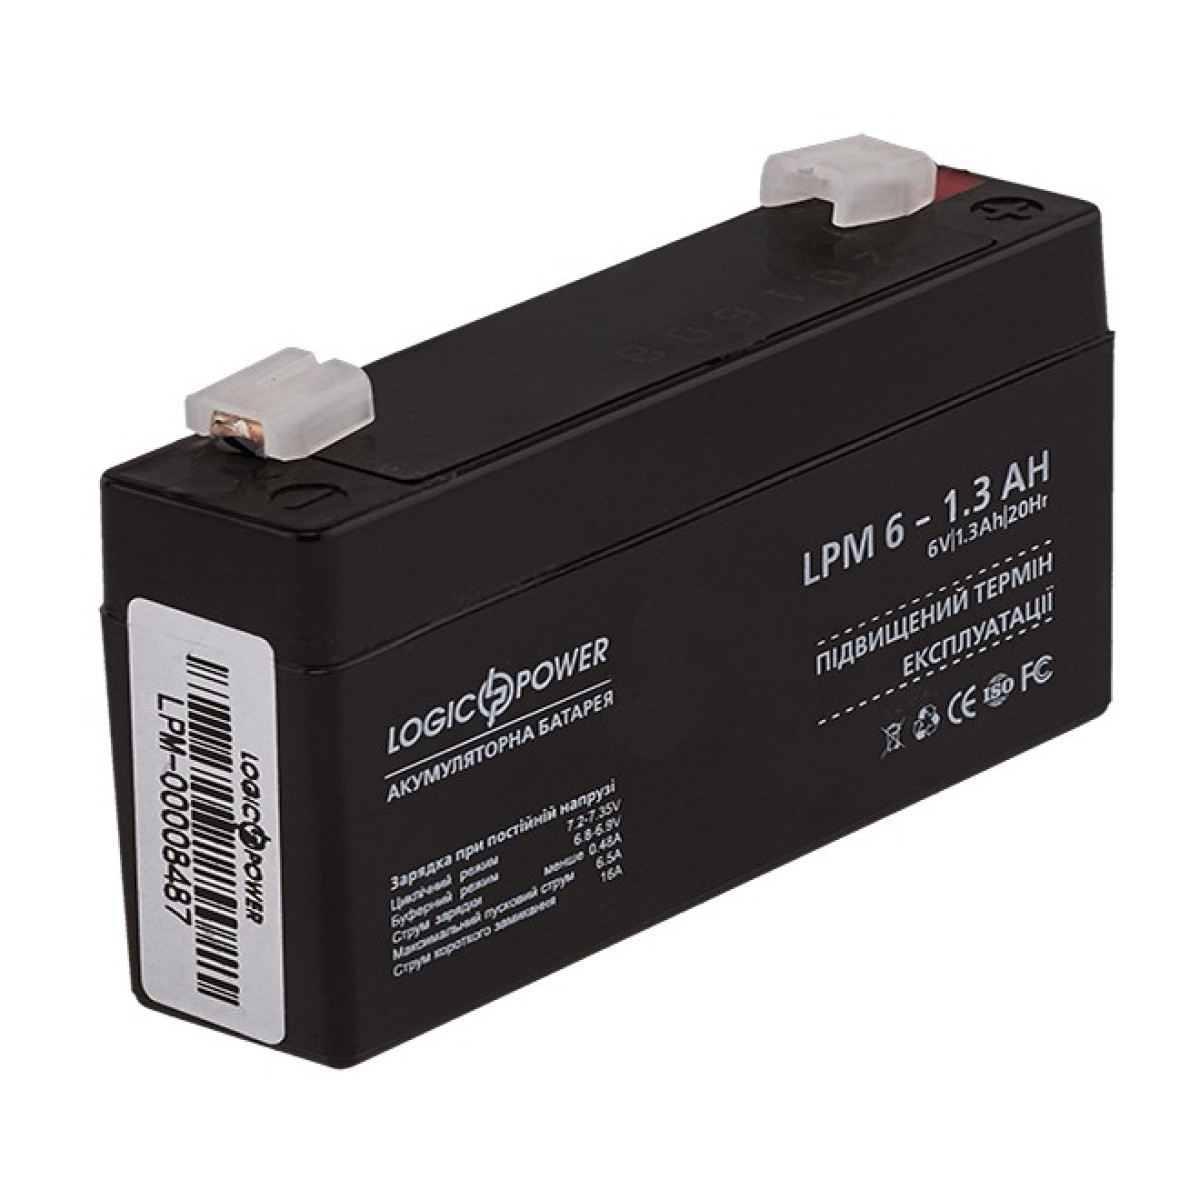 Аккумуляторные батареи LogicPower AGM LPM 6-1.3 AH - фото 1